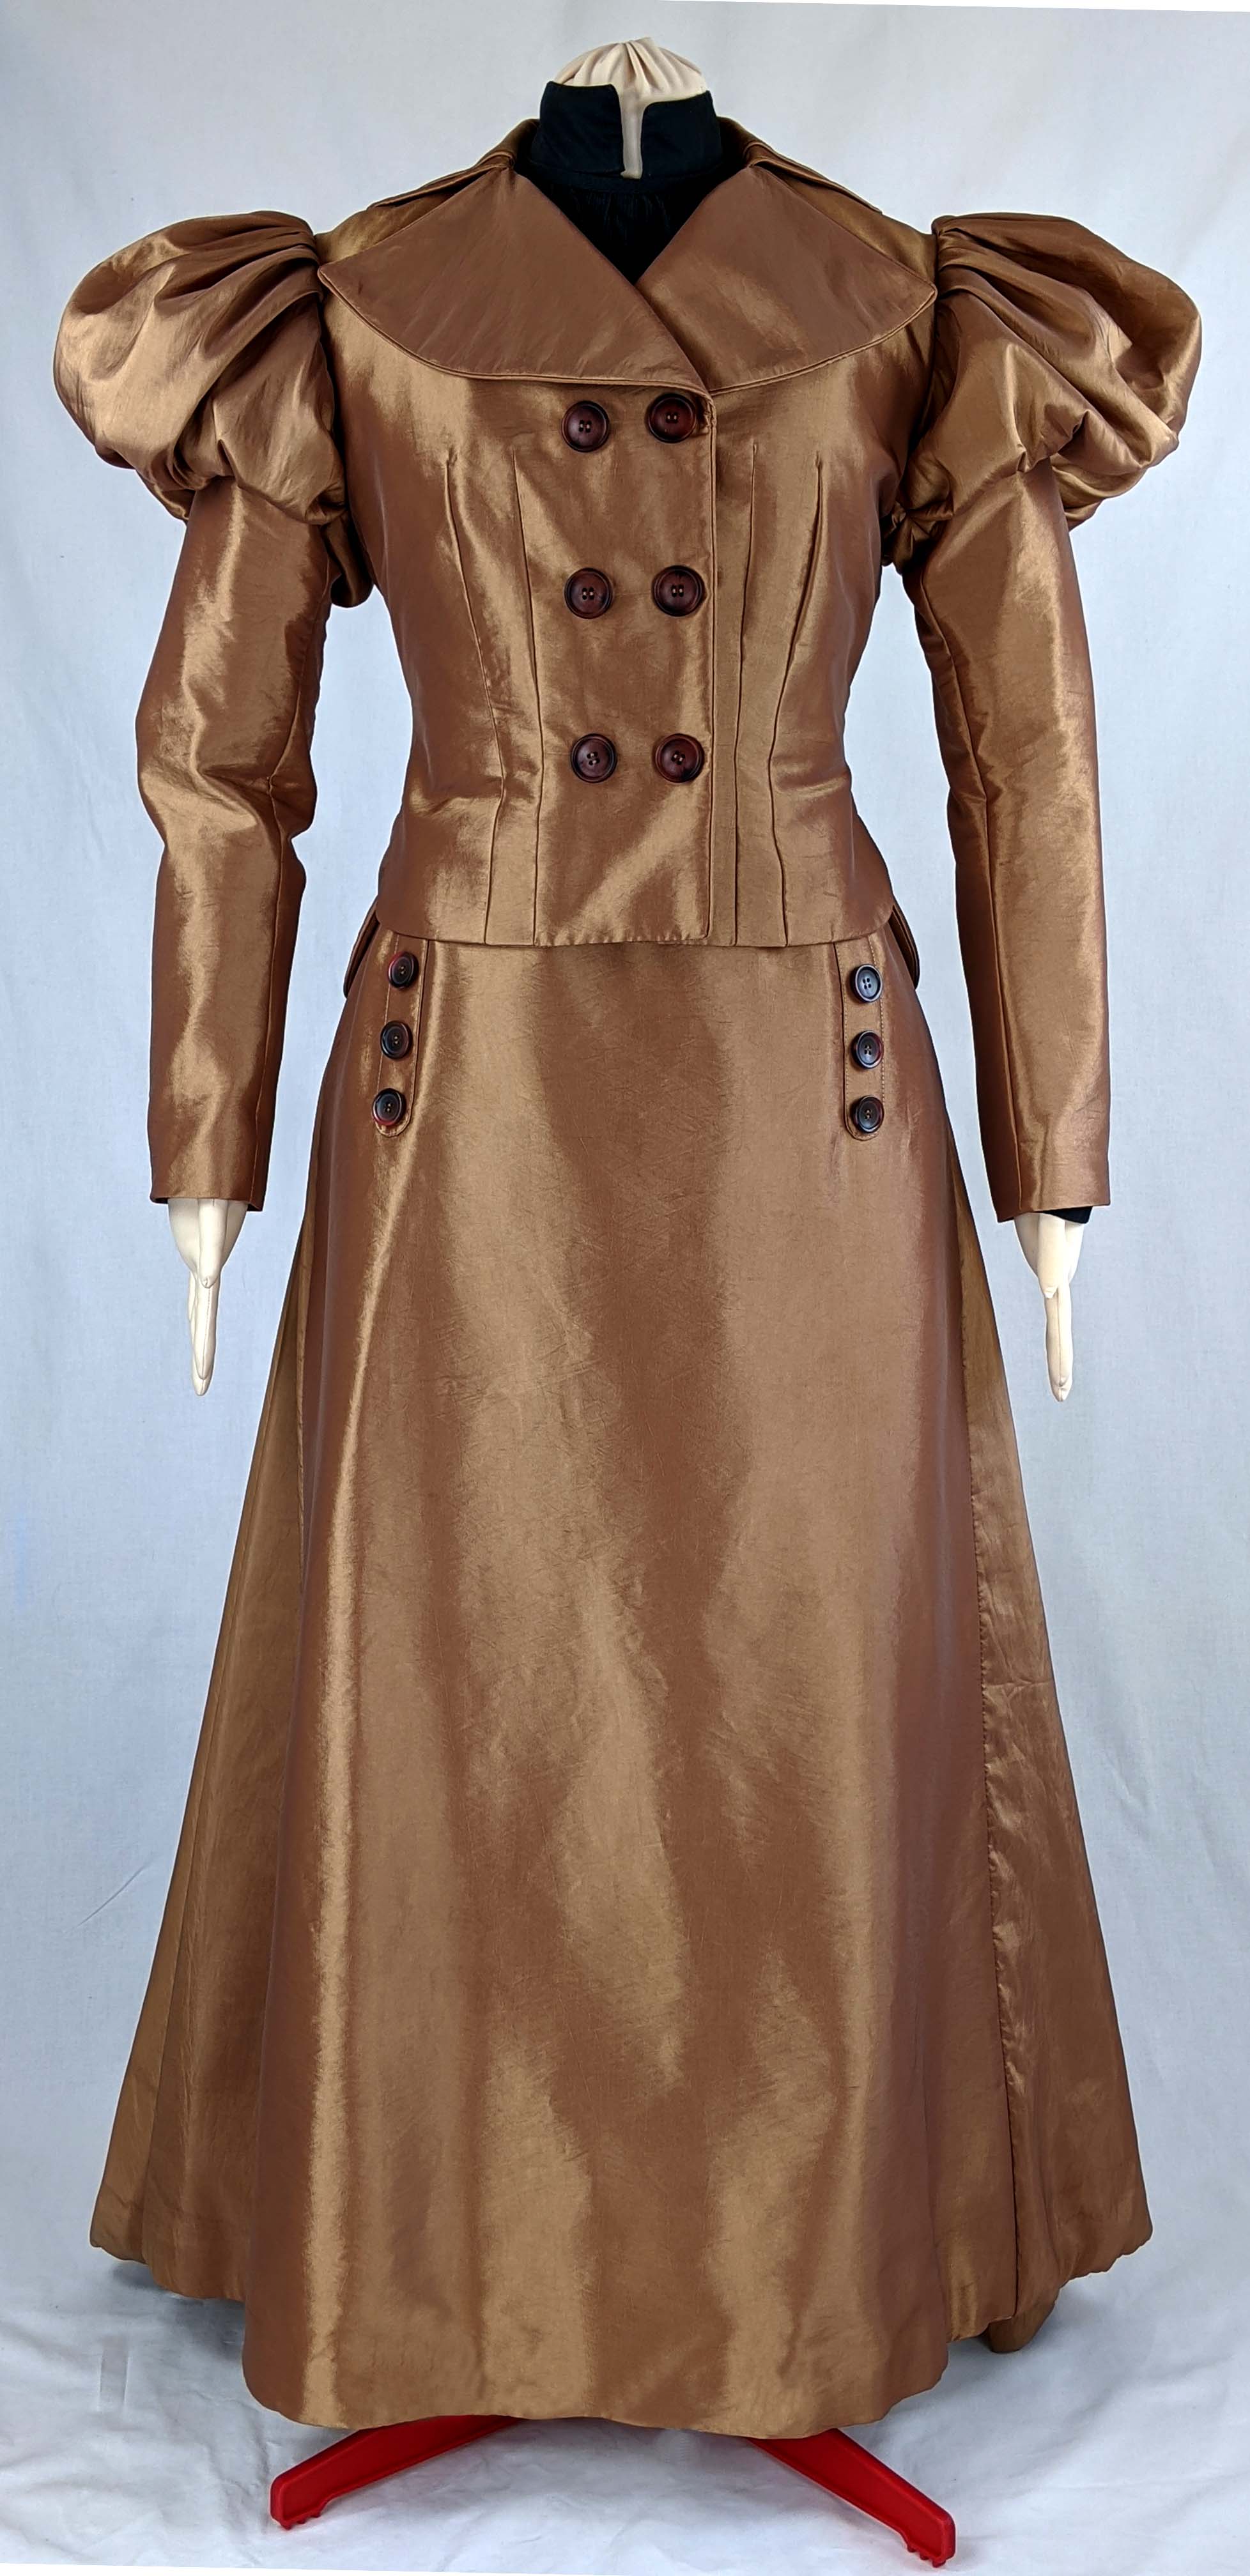 Edwardian Jacket with puff sleeves 1890 Sewing Pattern #0120 Size US 8-30 (EU 34-56)